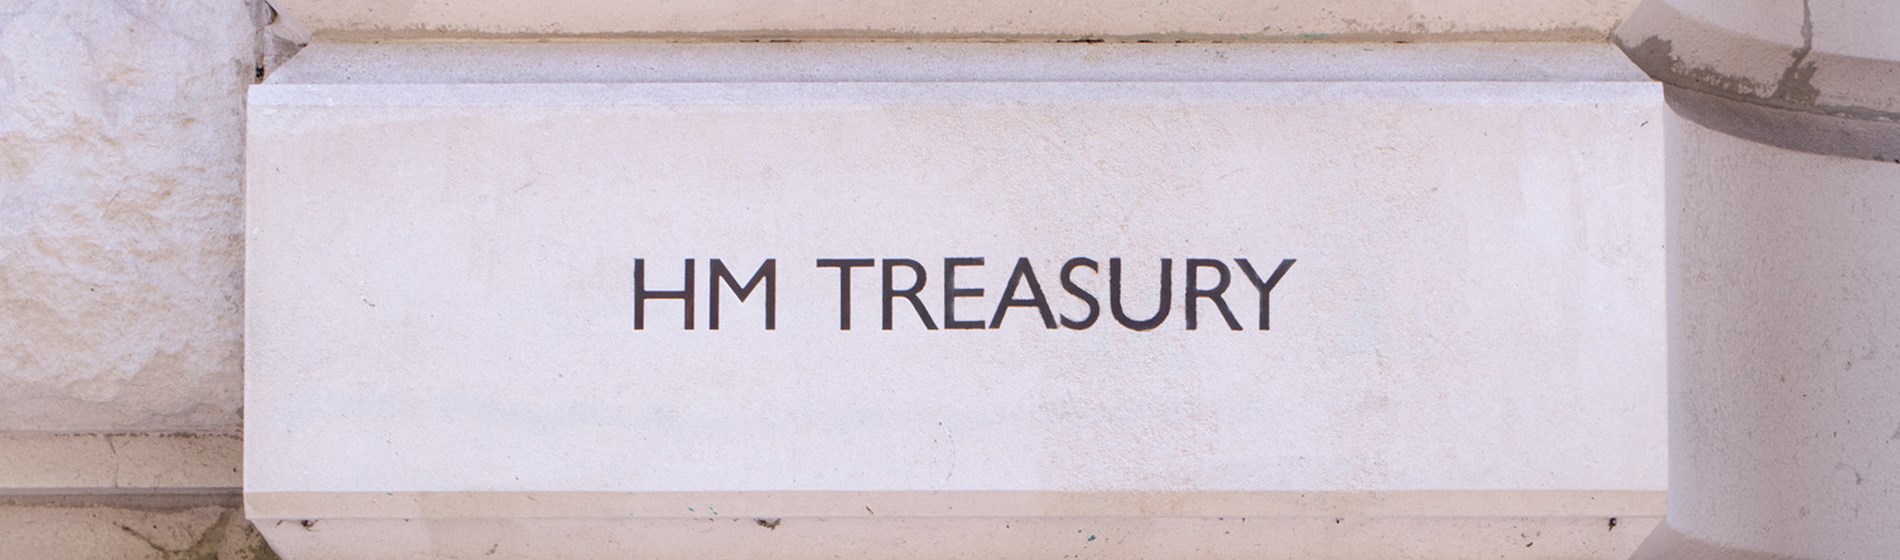 Image of treasury building with HM Treasury on it